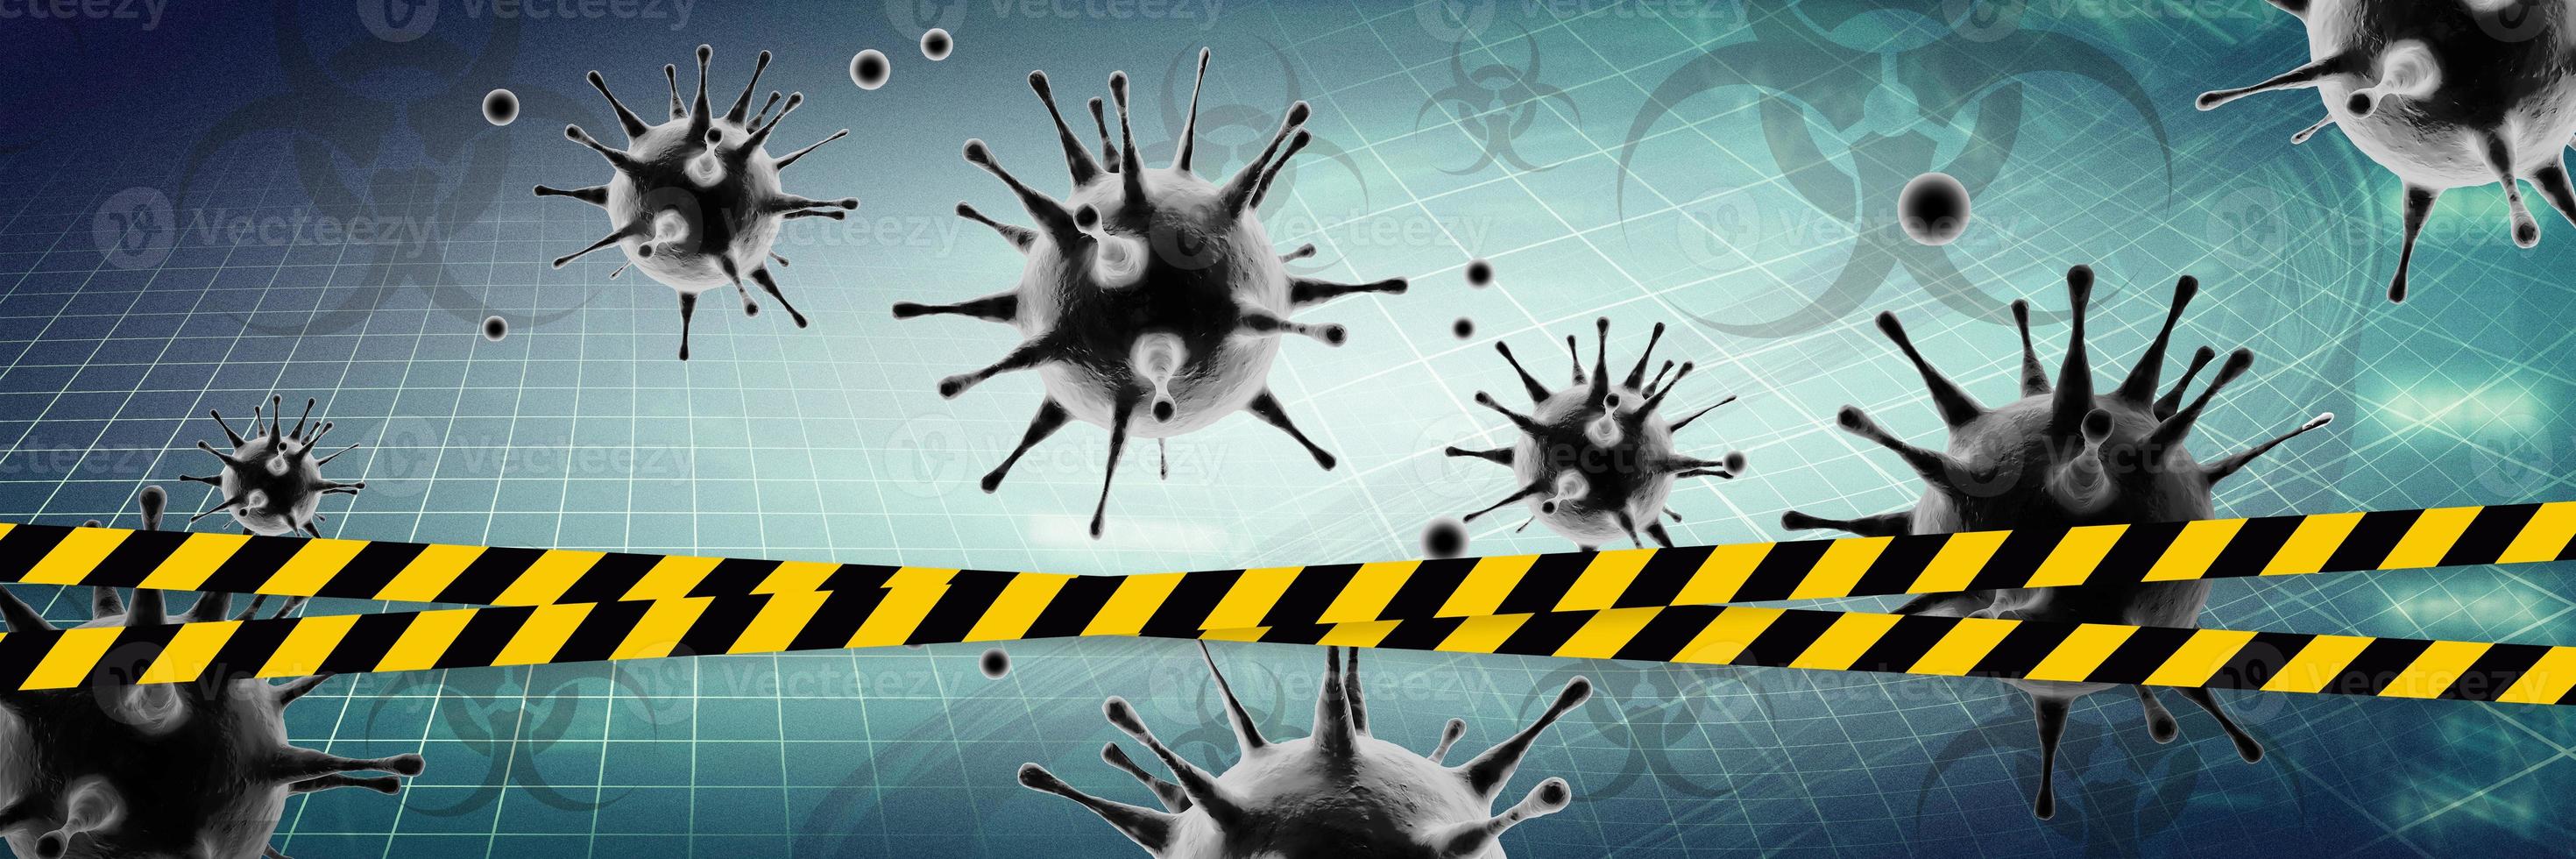 Corona virus background, pandemic risk concept. 3D illustration photo